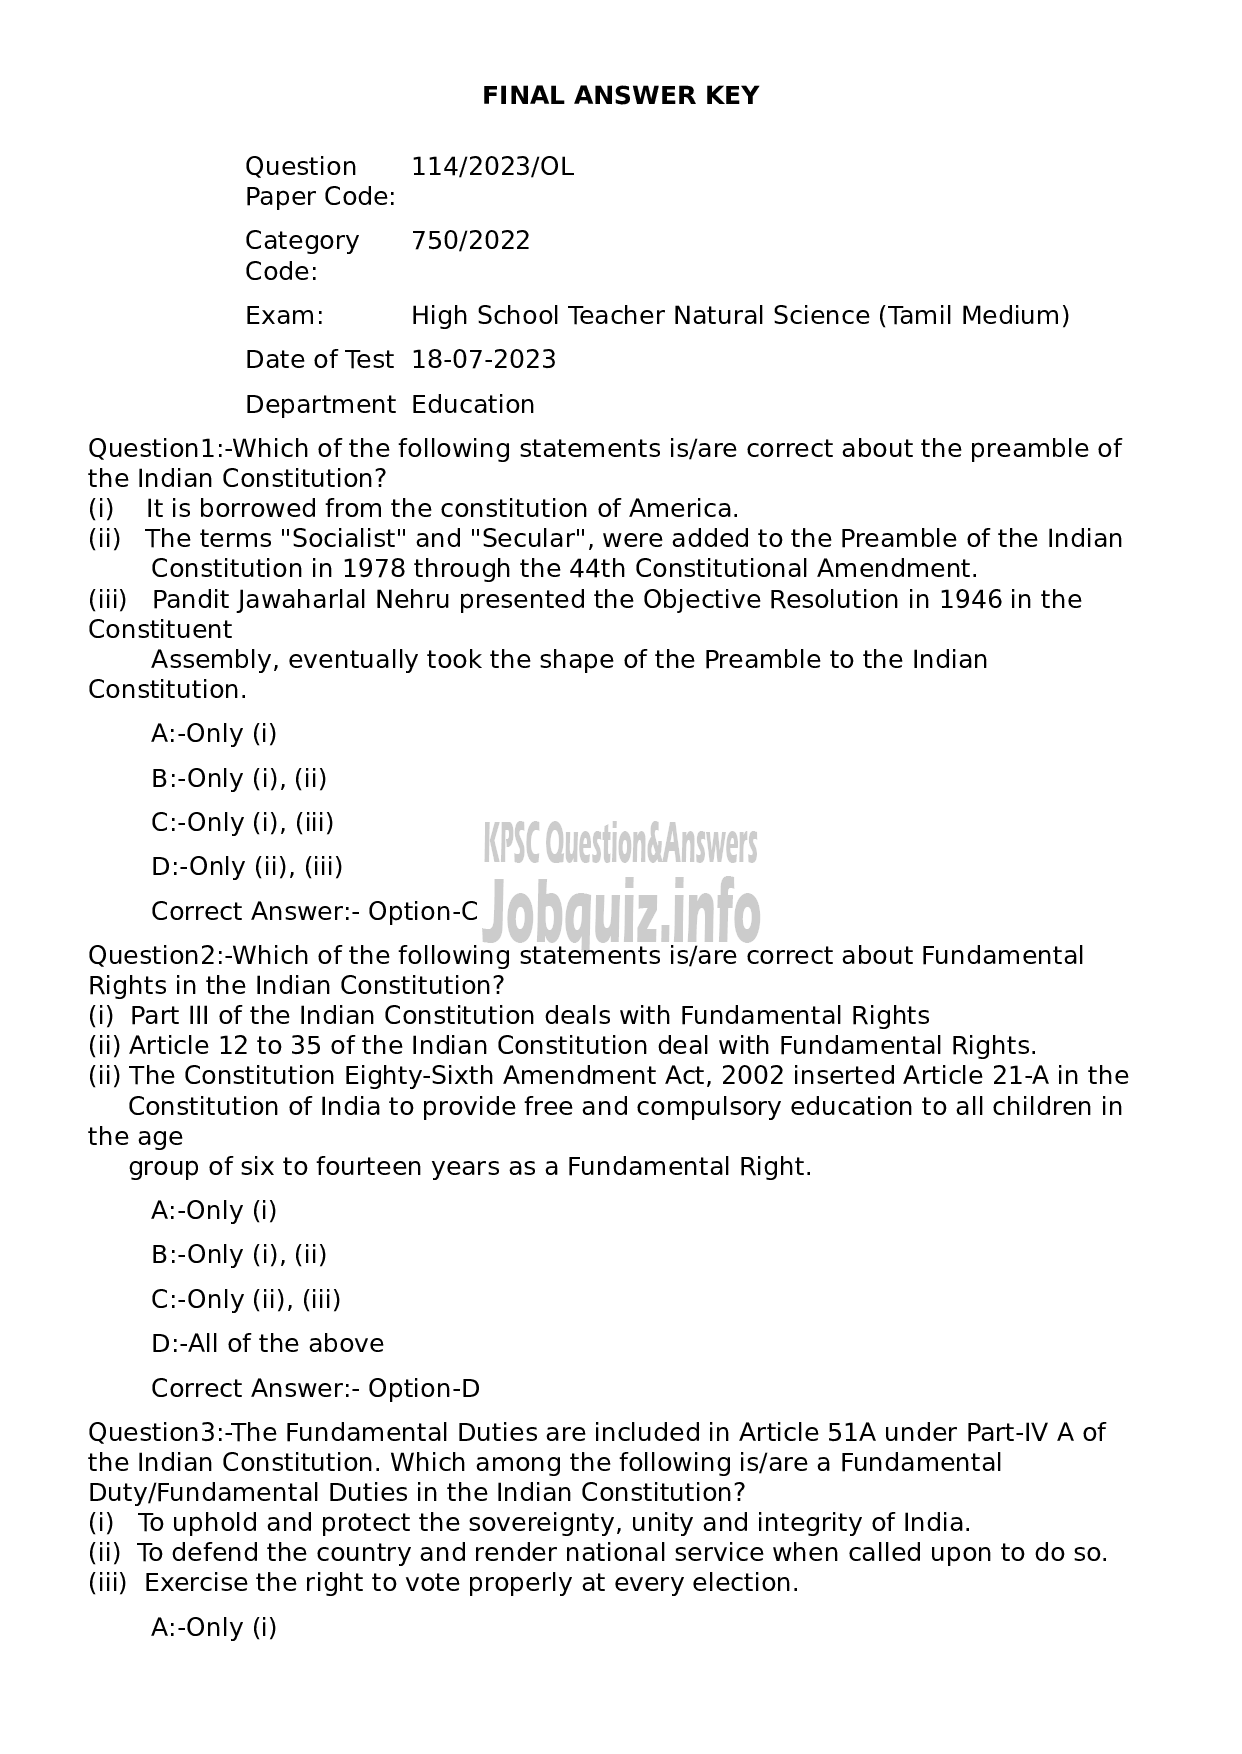 Kerala PSC Question Paper - High School Teacher Natural Science (Tamil Medium)-1